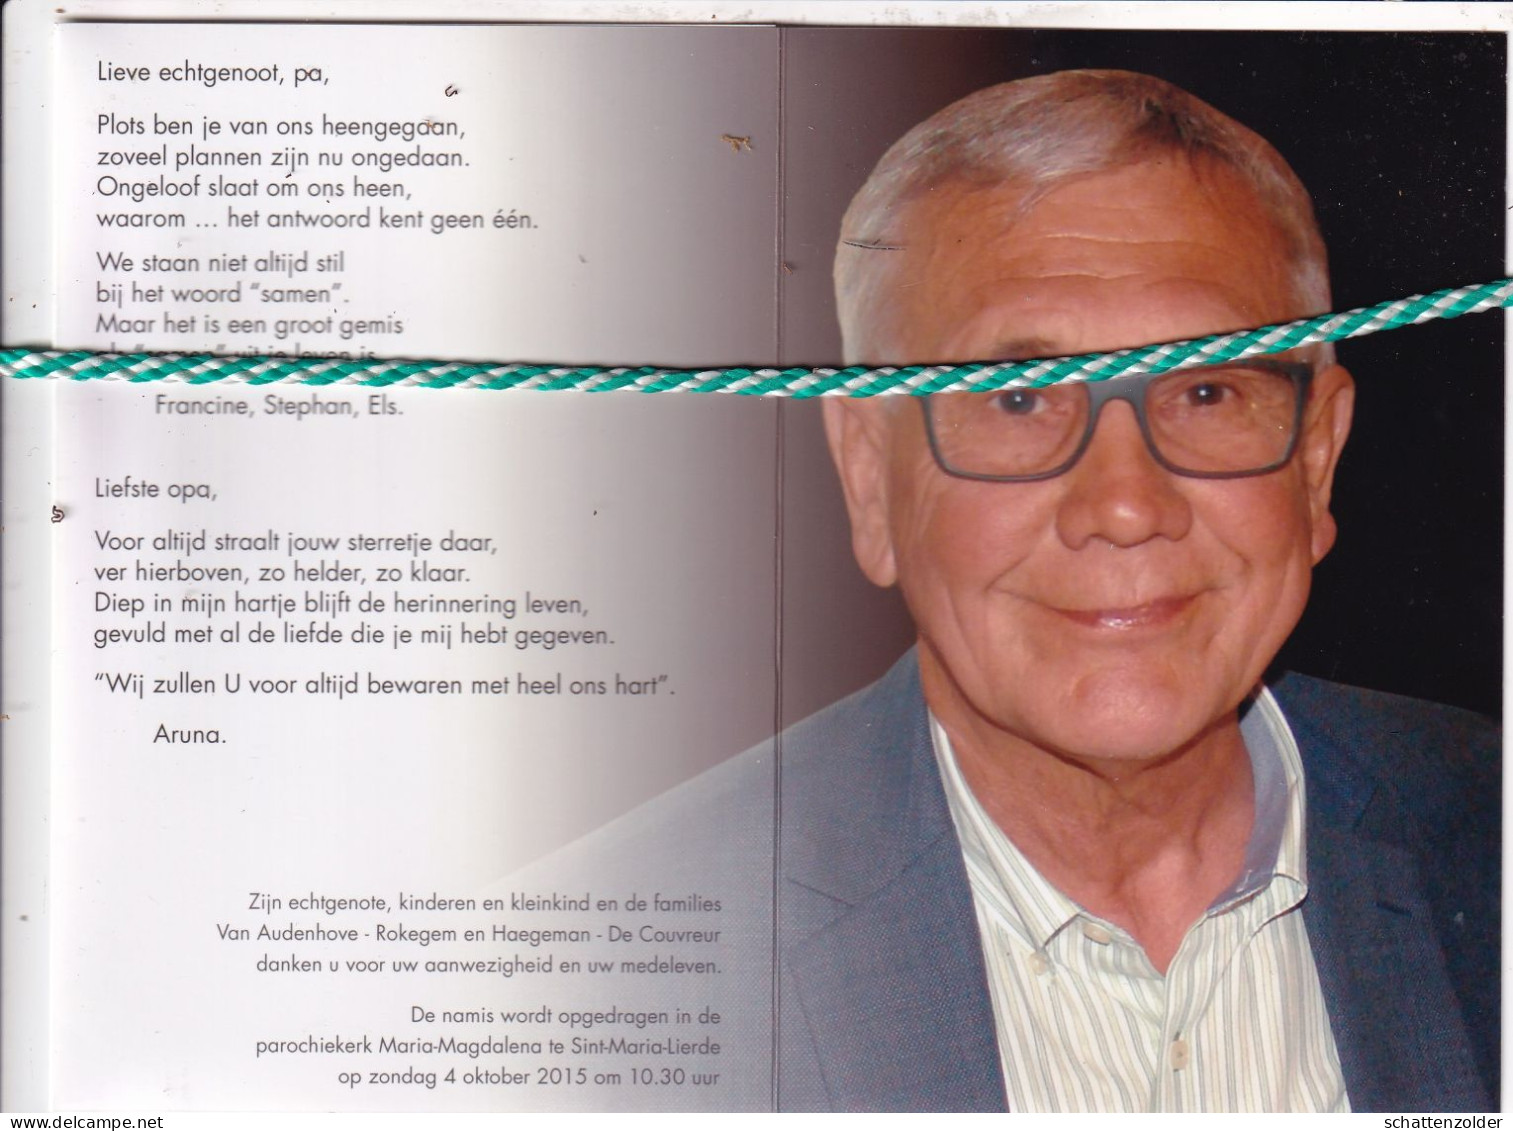 Jonny Van Audenhove-Haegeman, 1946, 2015. Foto - Obituary Notices